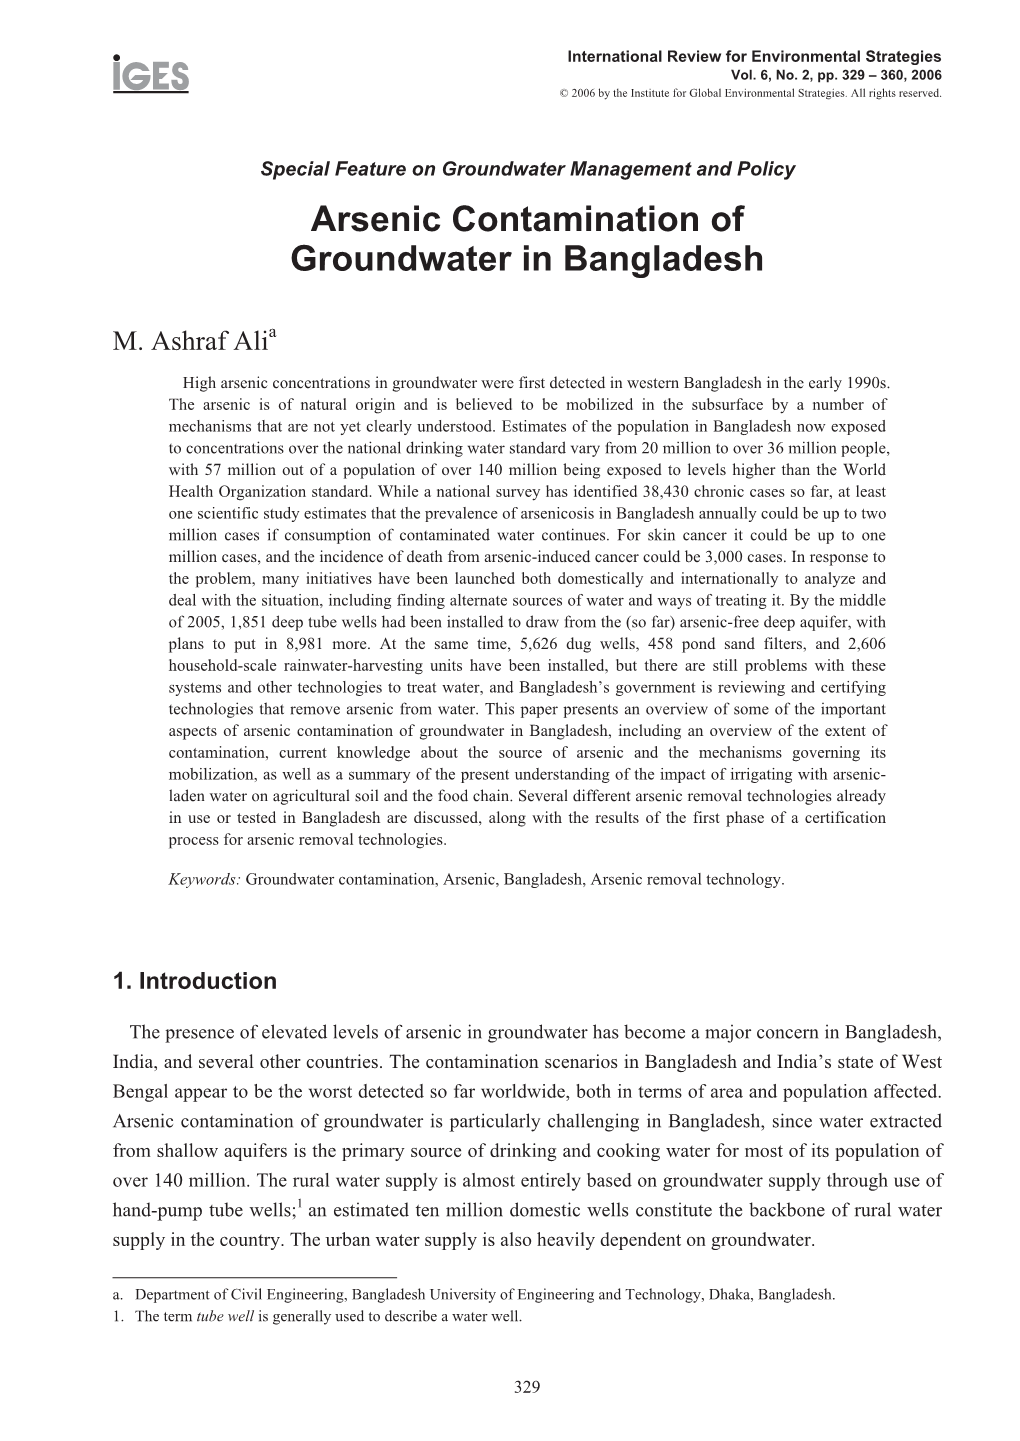 Arsenic Contamination of Groundwater in Bangladesh